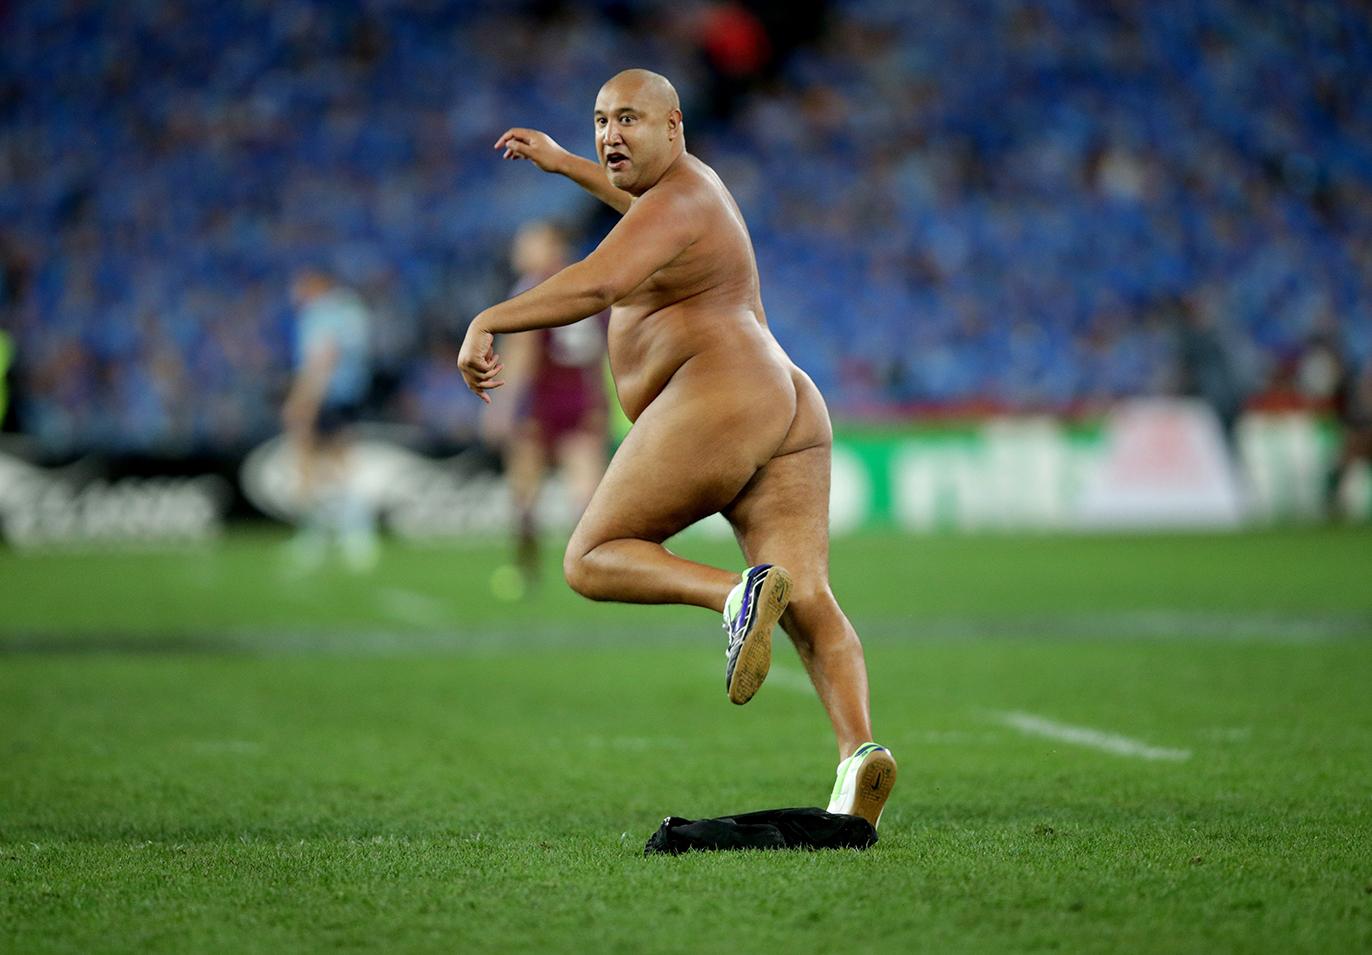 Wati Holmwoods naken-kupp i samband med en stor rugbymatch i Australien har hyllats i sociala medier. Streakaren var insmord i vaselin.